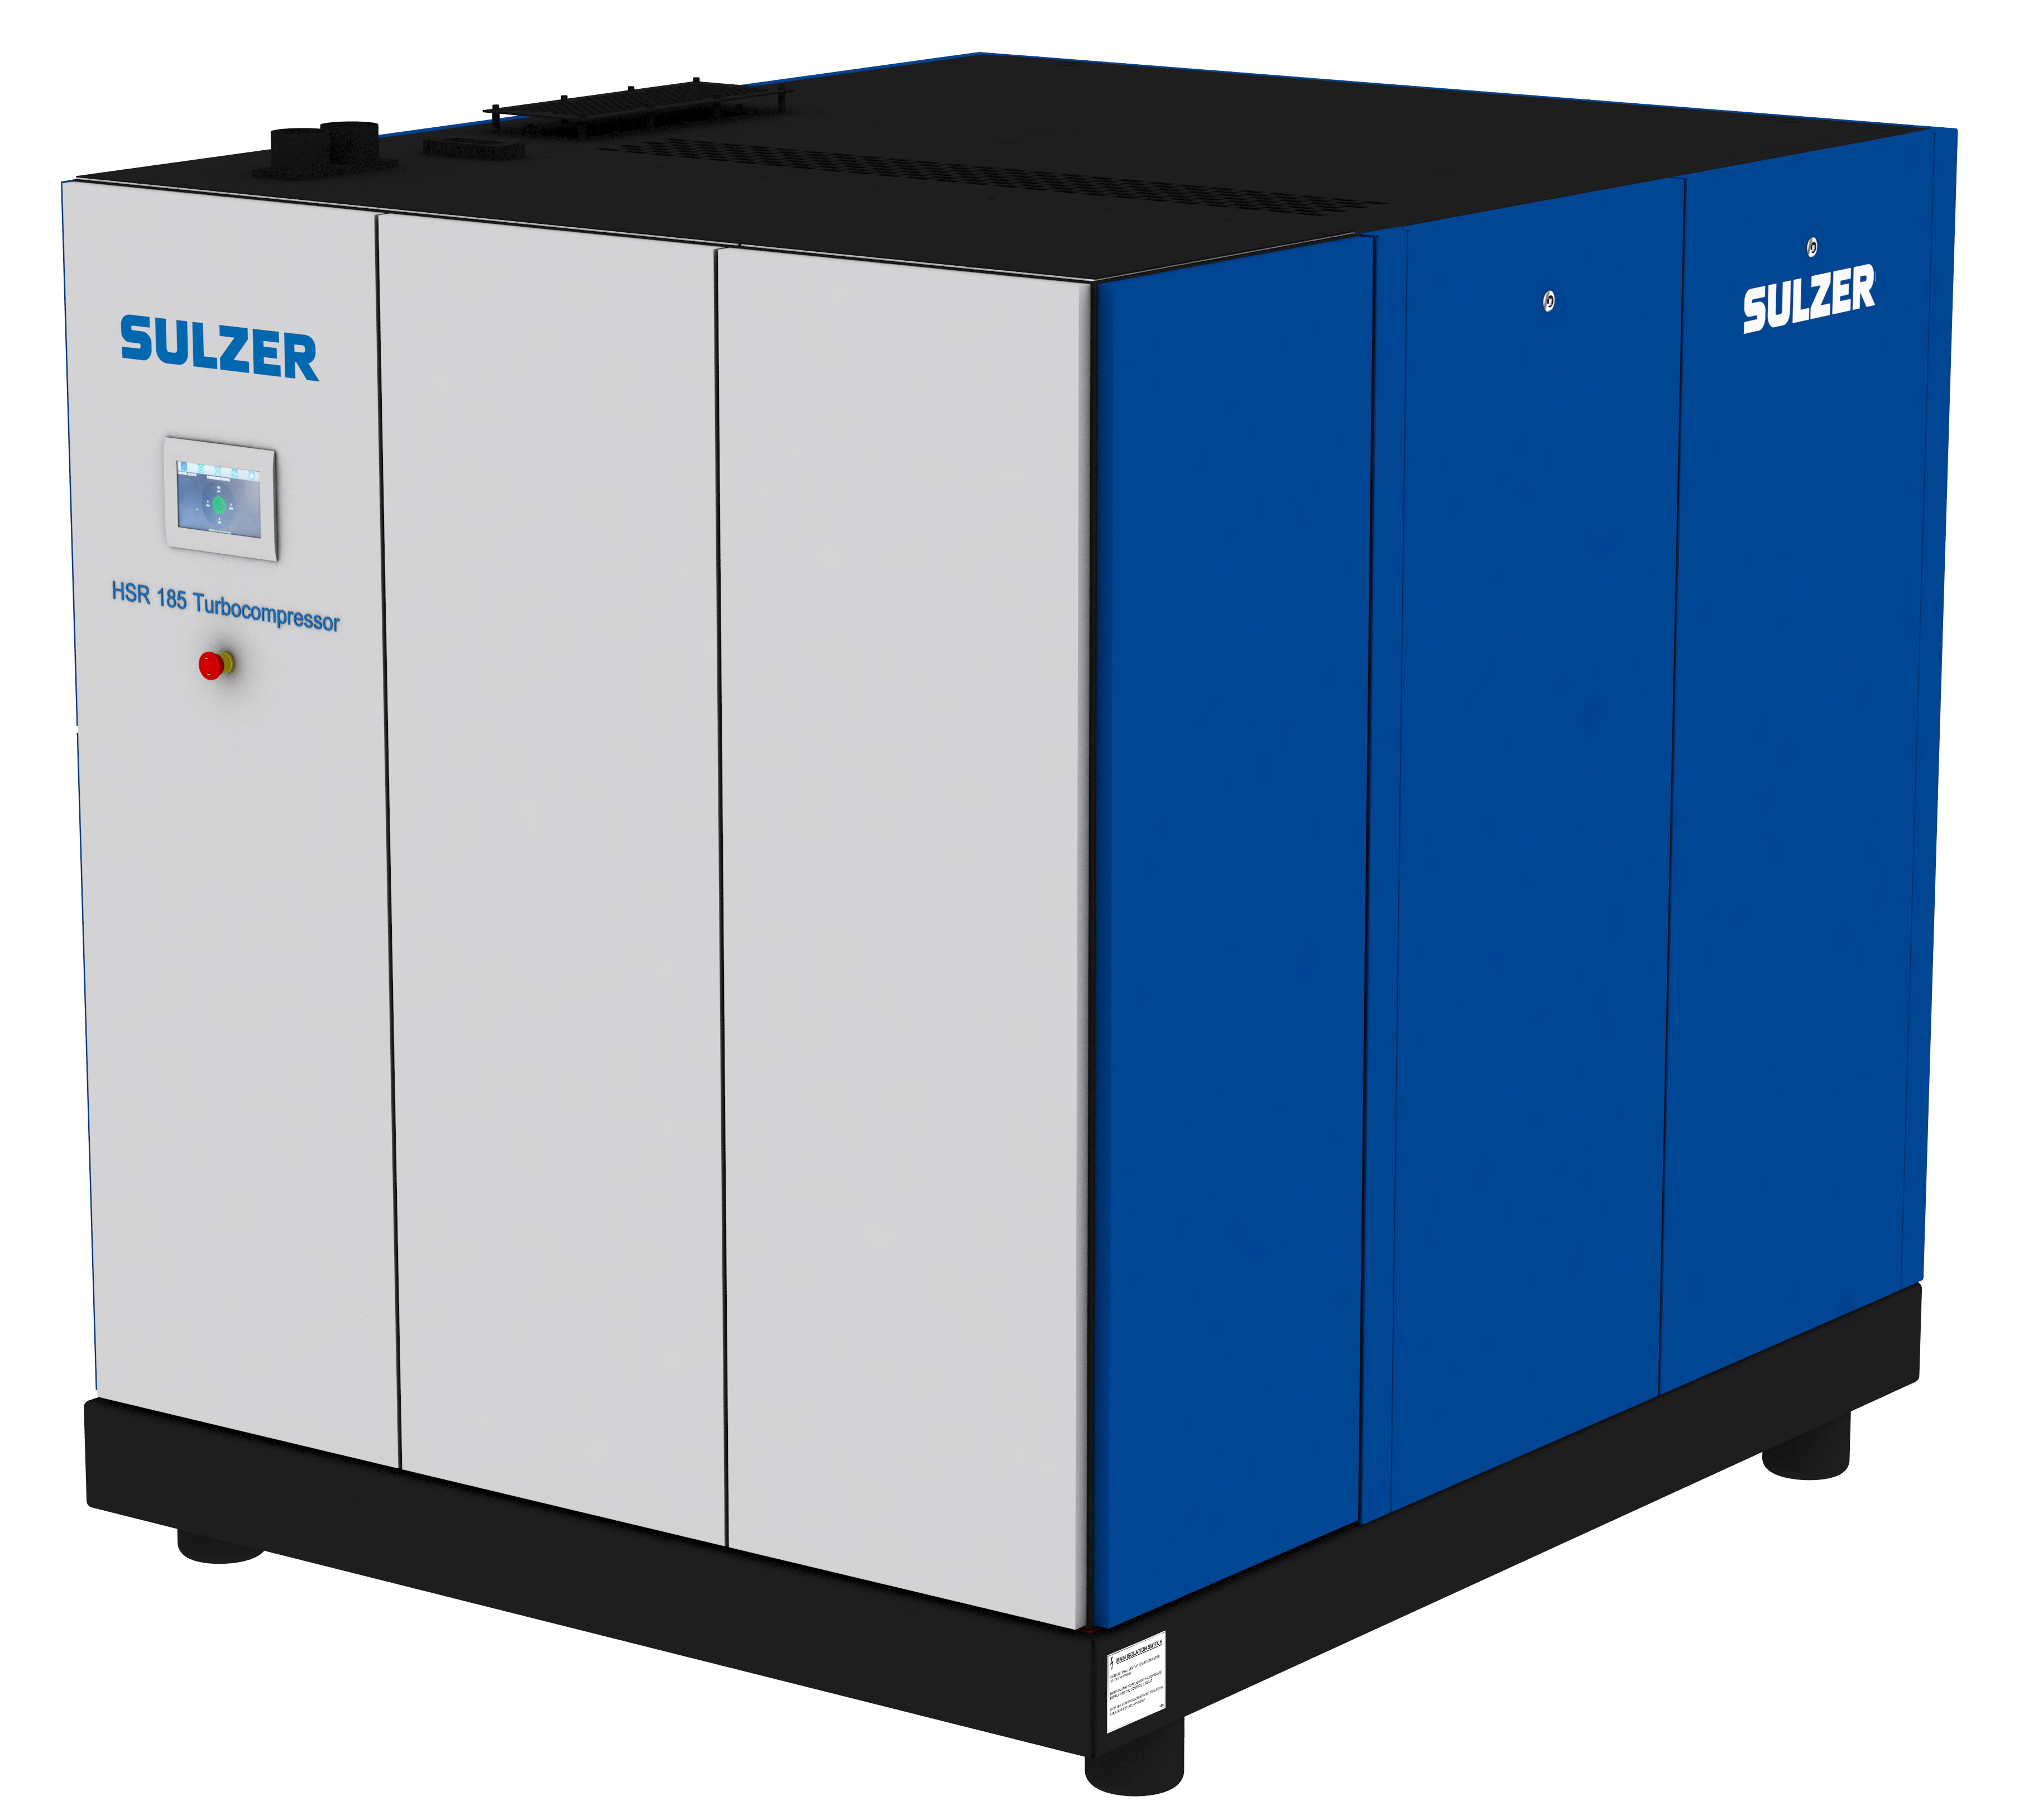 Sulzer's new HSR turbocompressors contain no oil or other liquid lubricant.